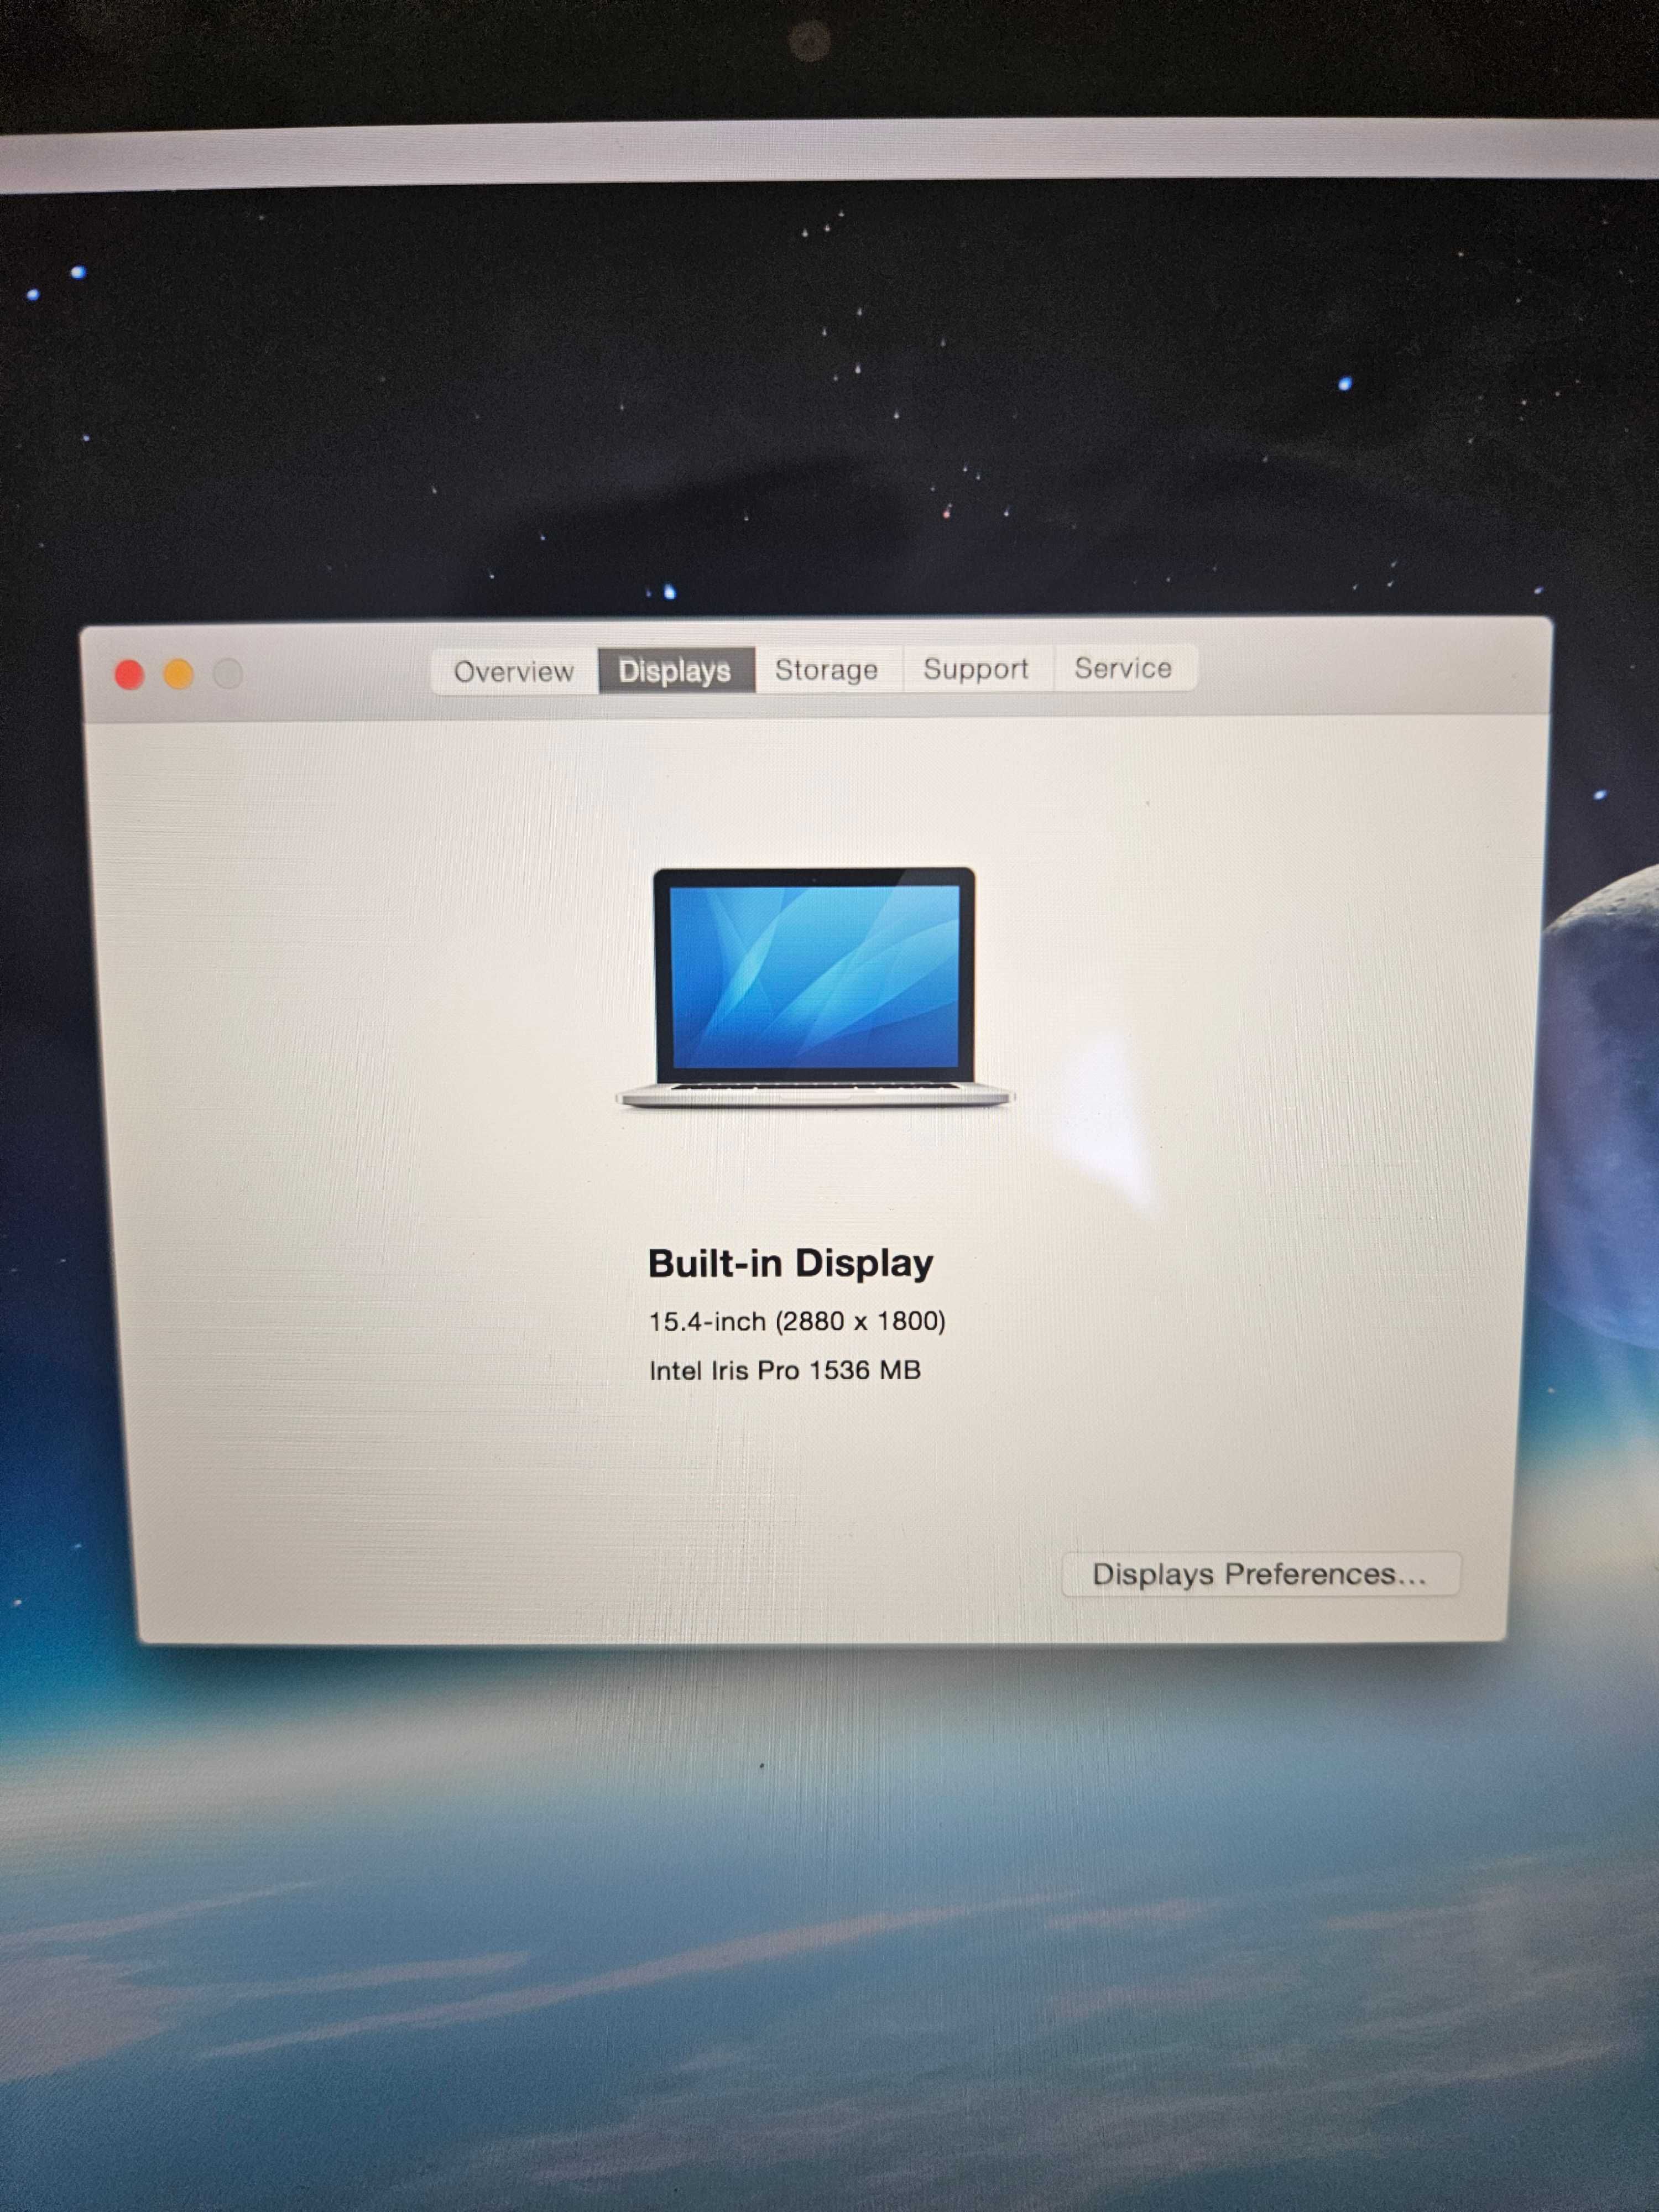 MacBook Pro 15 late 2013